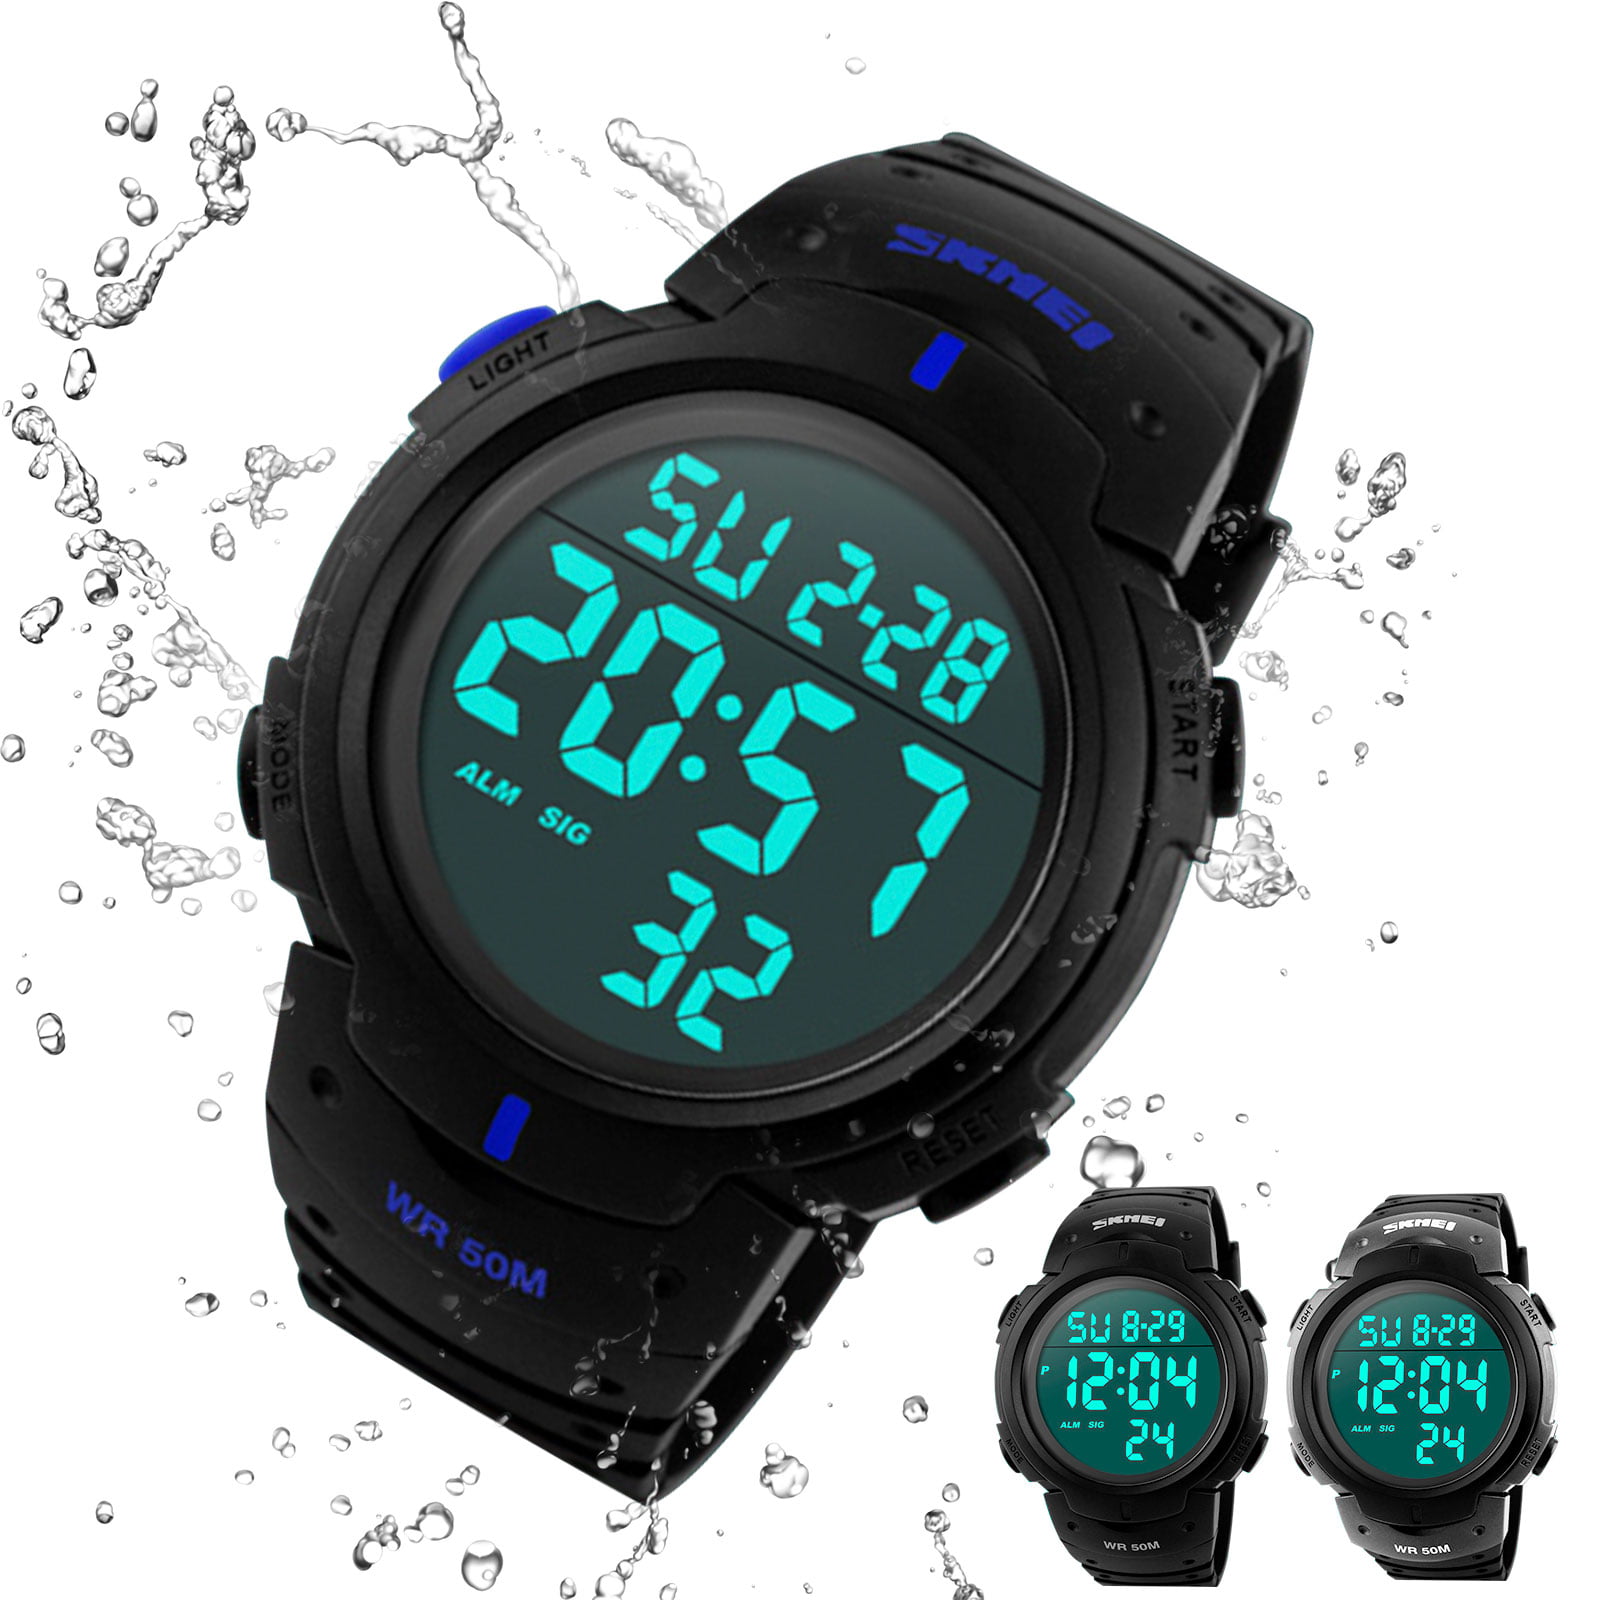 Eeekit Men S Digital Watch Large Face Led Wrist Watches Military Sports Electronic Waterproof